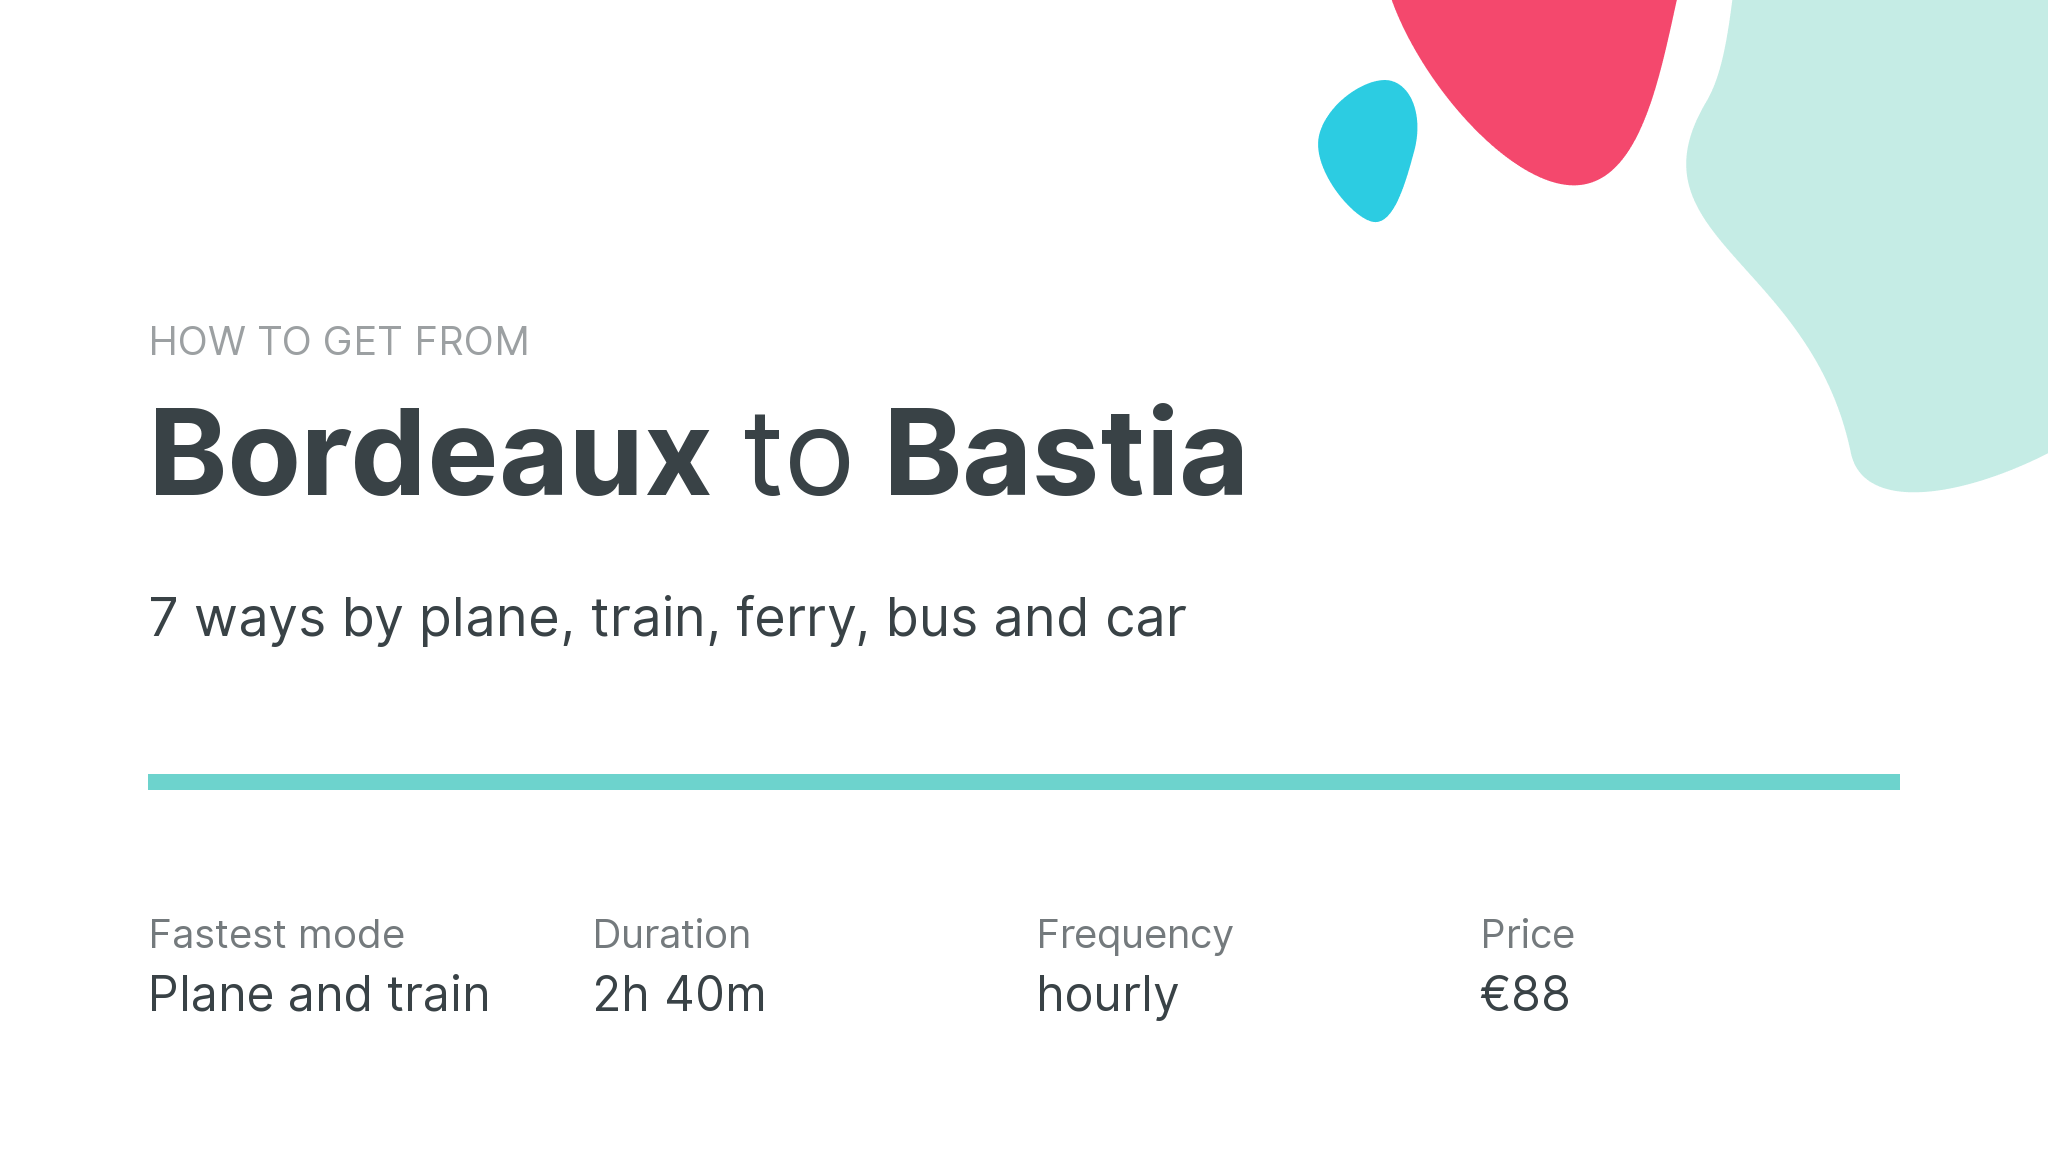 How do I get from Bordeaux to Bastia